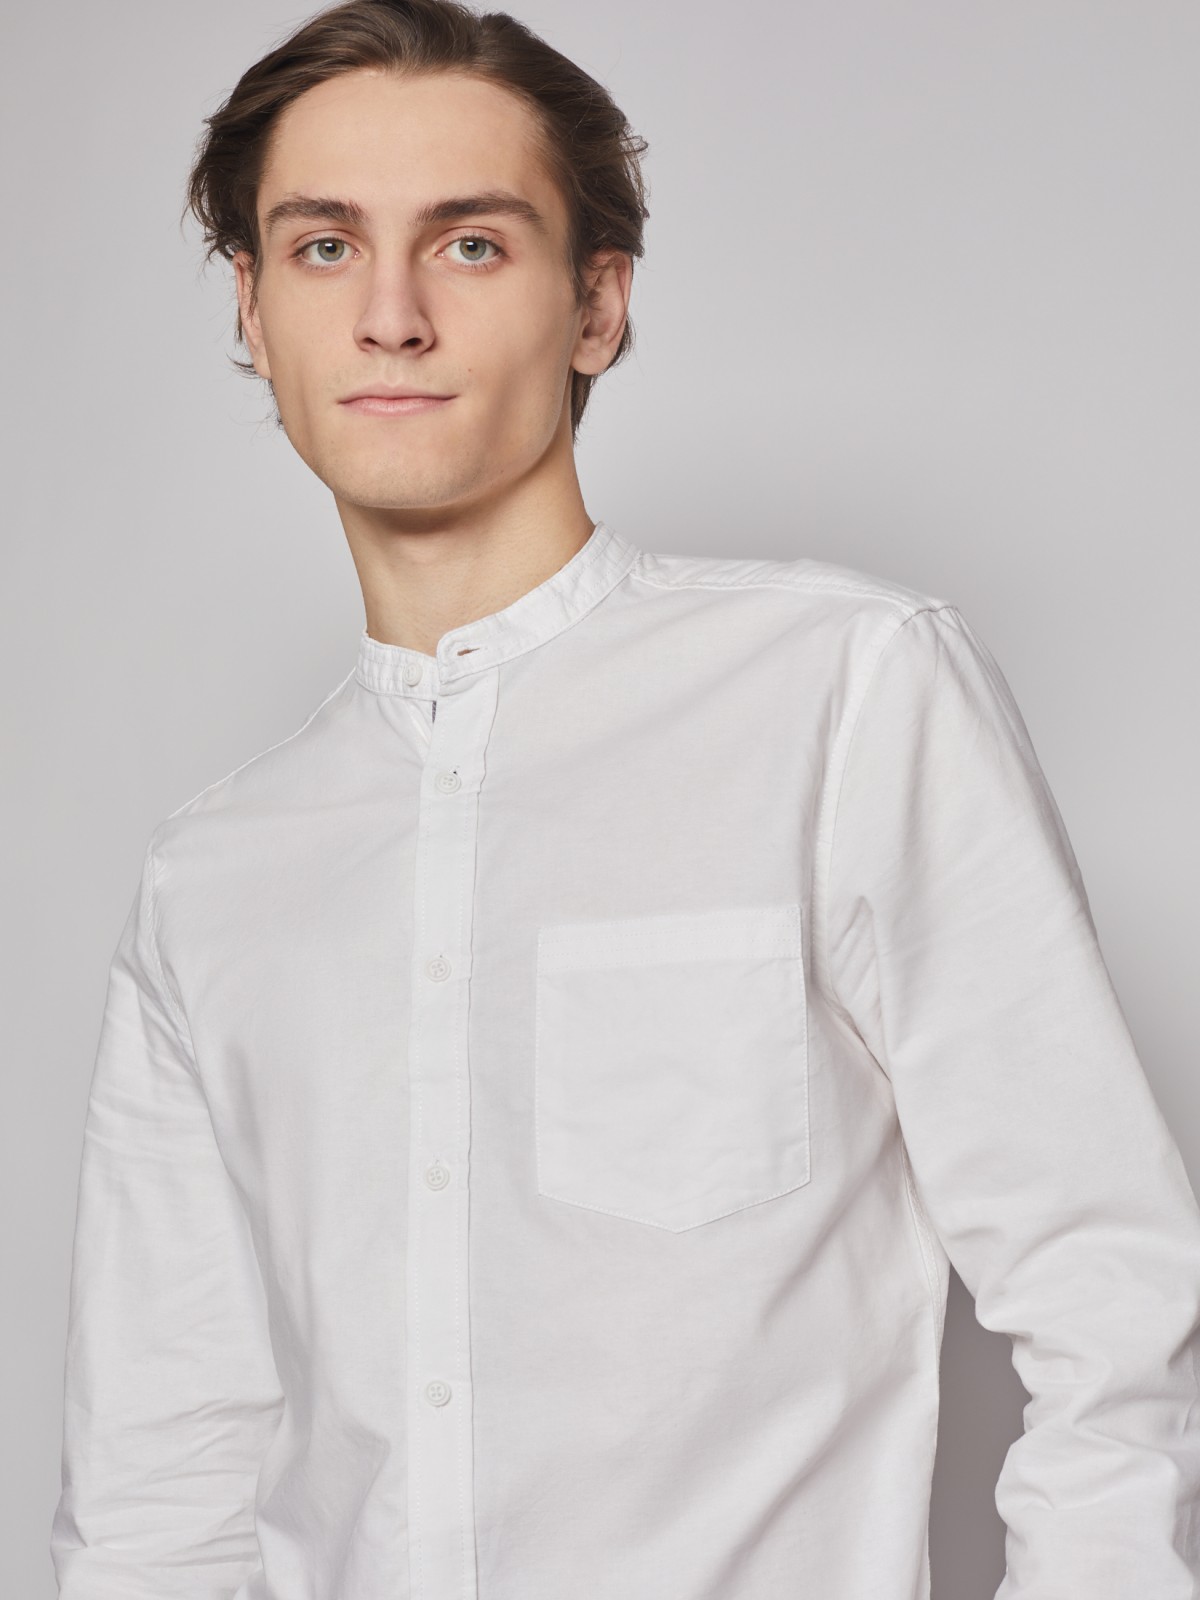 Хлопковая рубашка без воротника zolla 21312214R013, цвет белый, размер S - фото 5